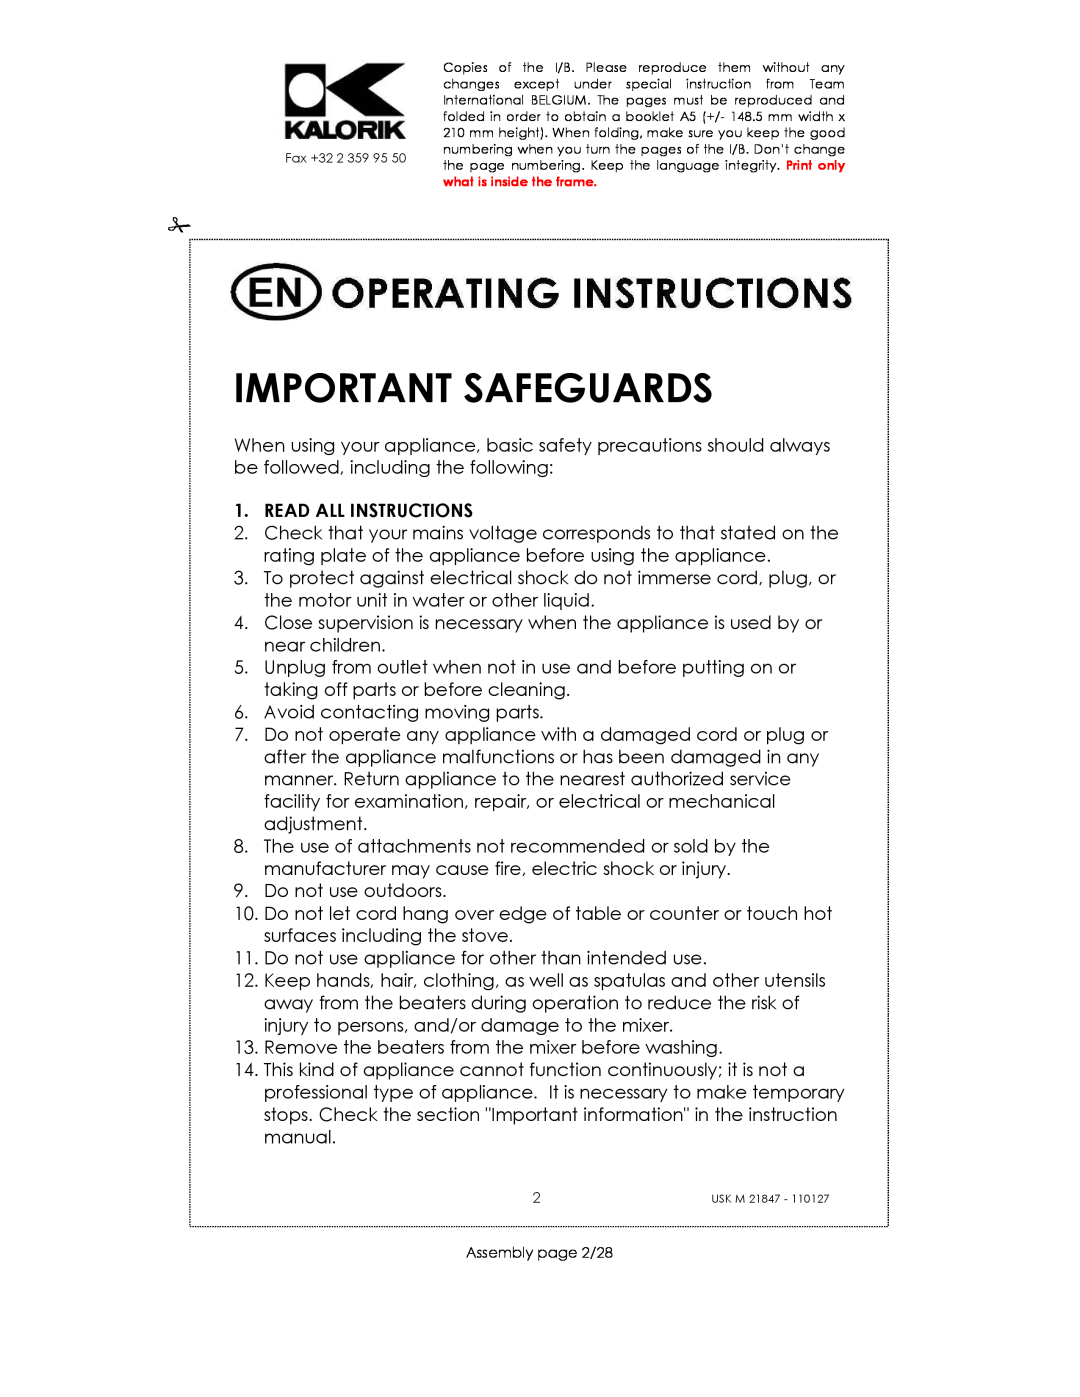 Kalorik USK M 21847 manual Important Safeguards, Read All Instructions 